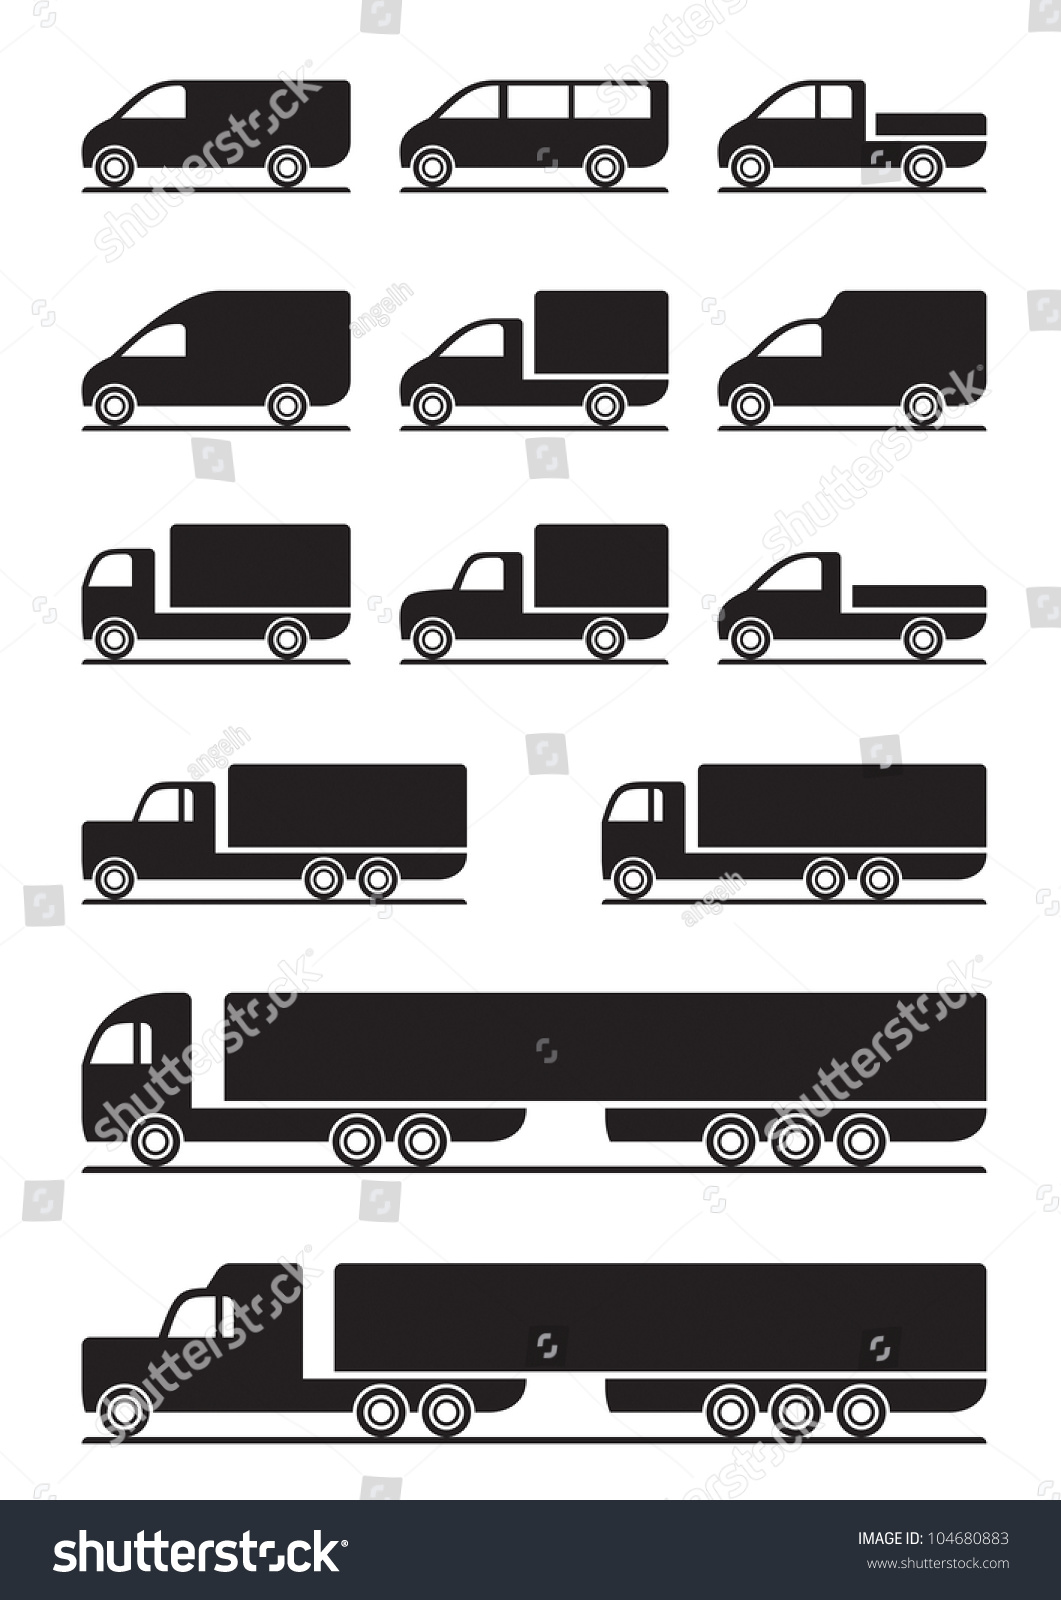 Trucks And Pickups - Vector Illustration - 104680883 : Shutterstock